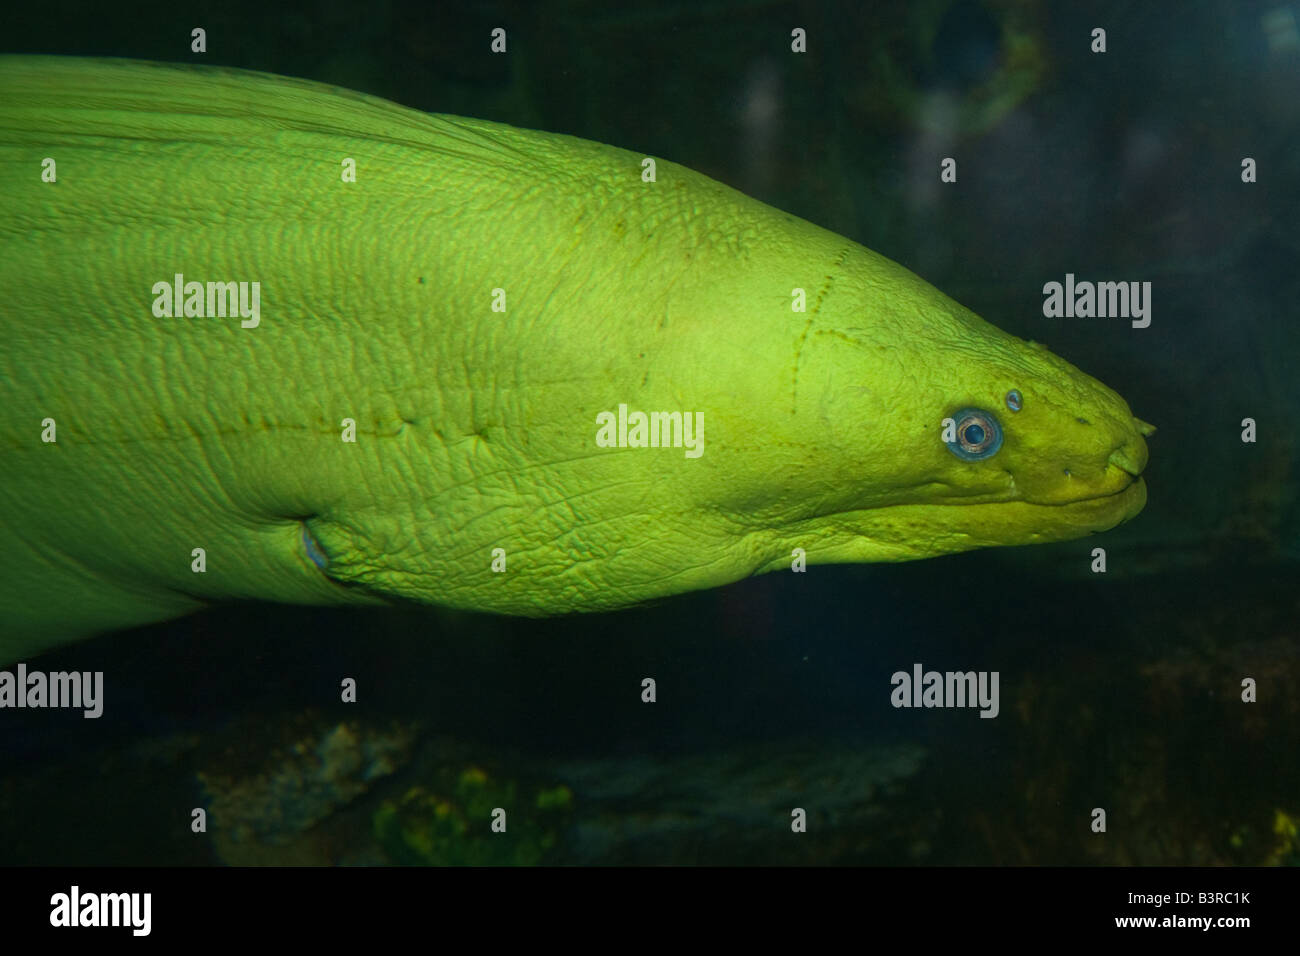 A close up colour head shot photograph of a green moray eel (001) Stock Photo